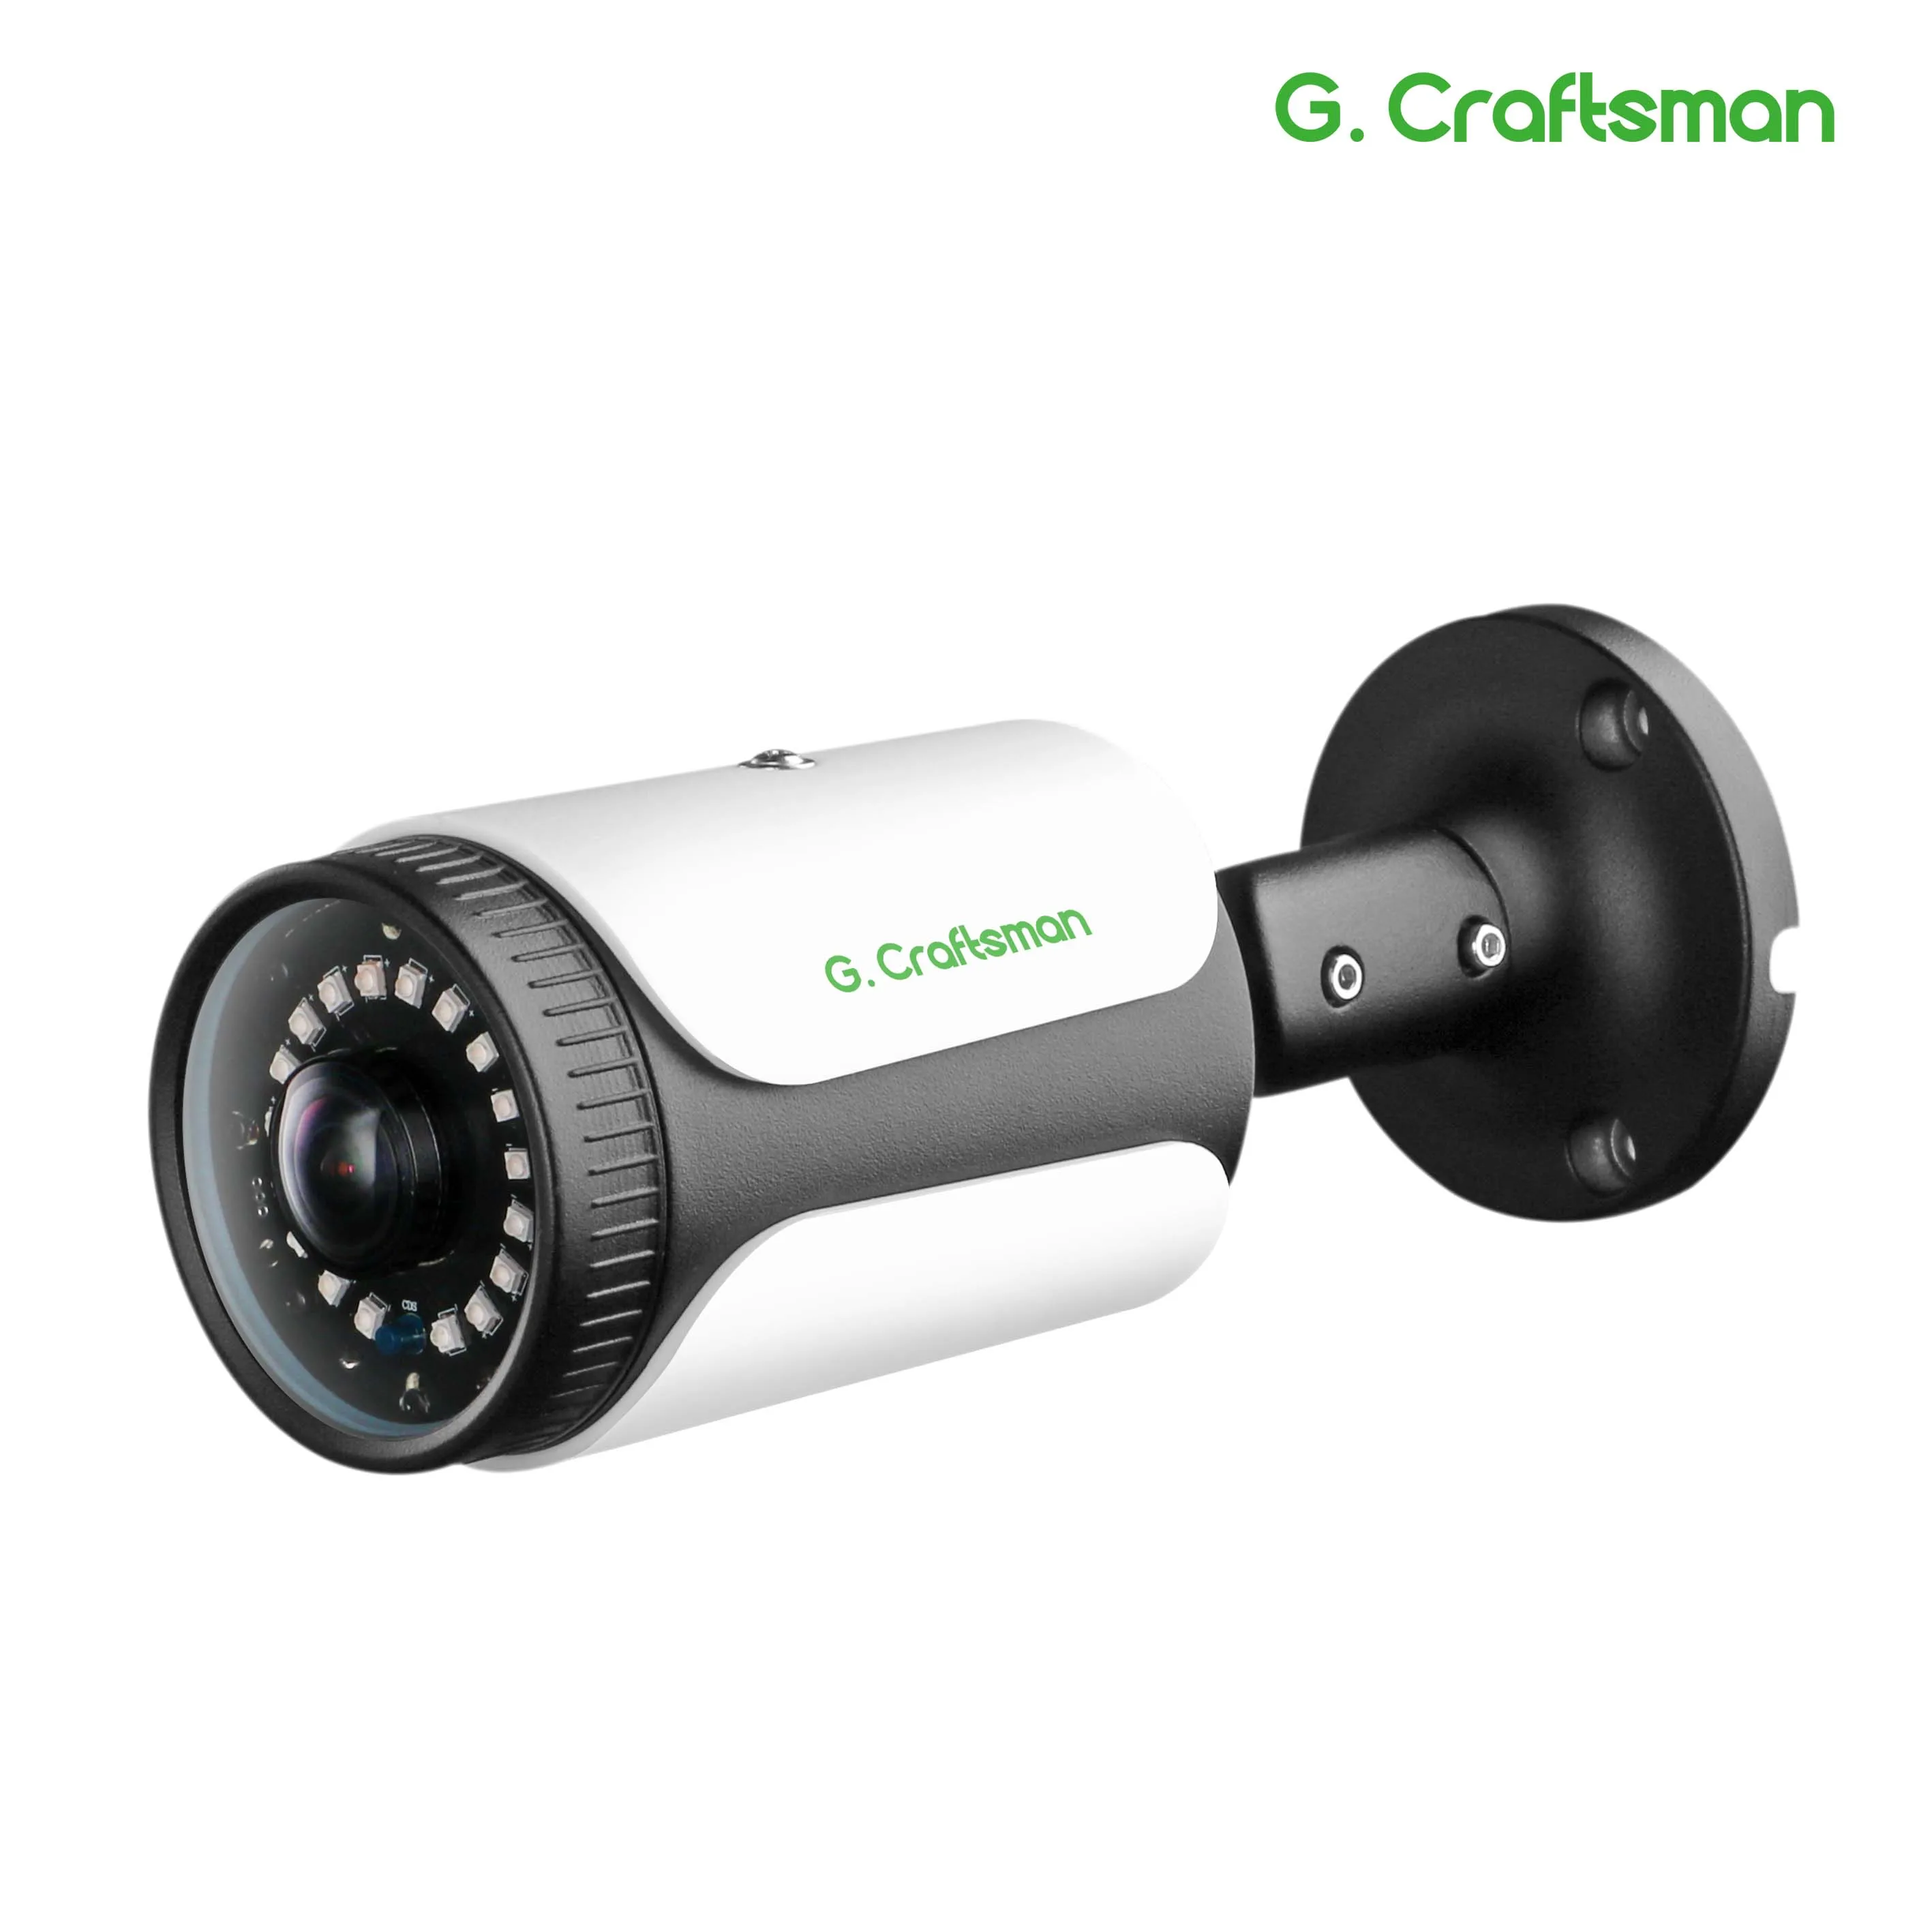 Super Wide Angle POE IP Camera 5MP 4K SONY Surveillance Security CCTV Video Waterproof IR Night Vision G.Craftsman